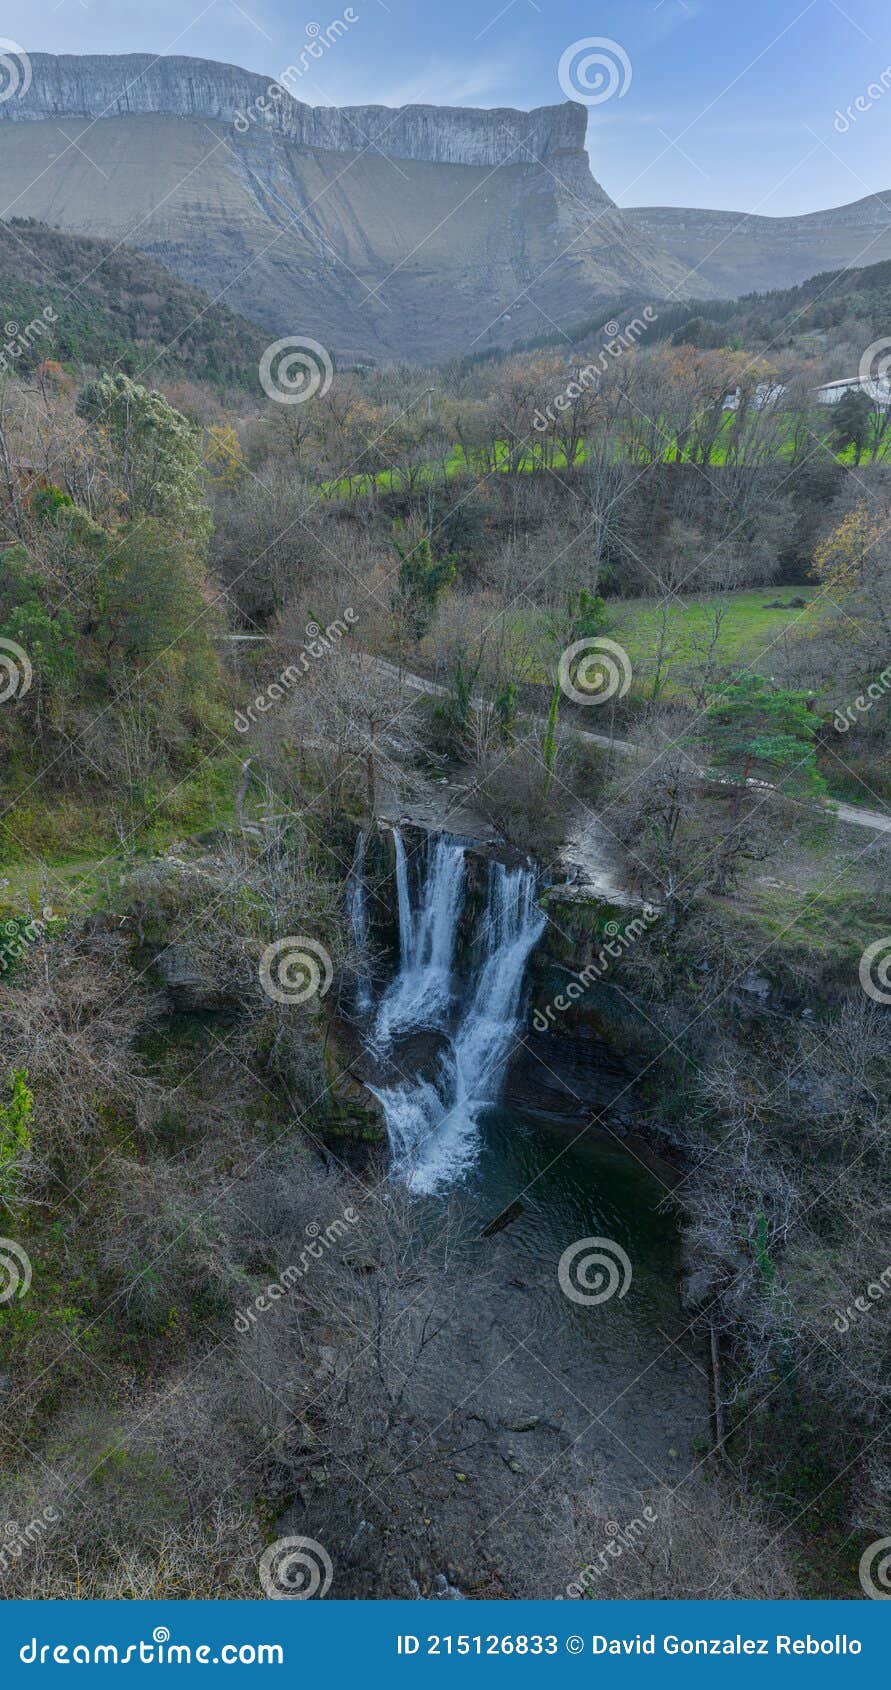 waterfall of penaladros in cozuela aerial view, burgos, spain